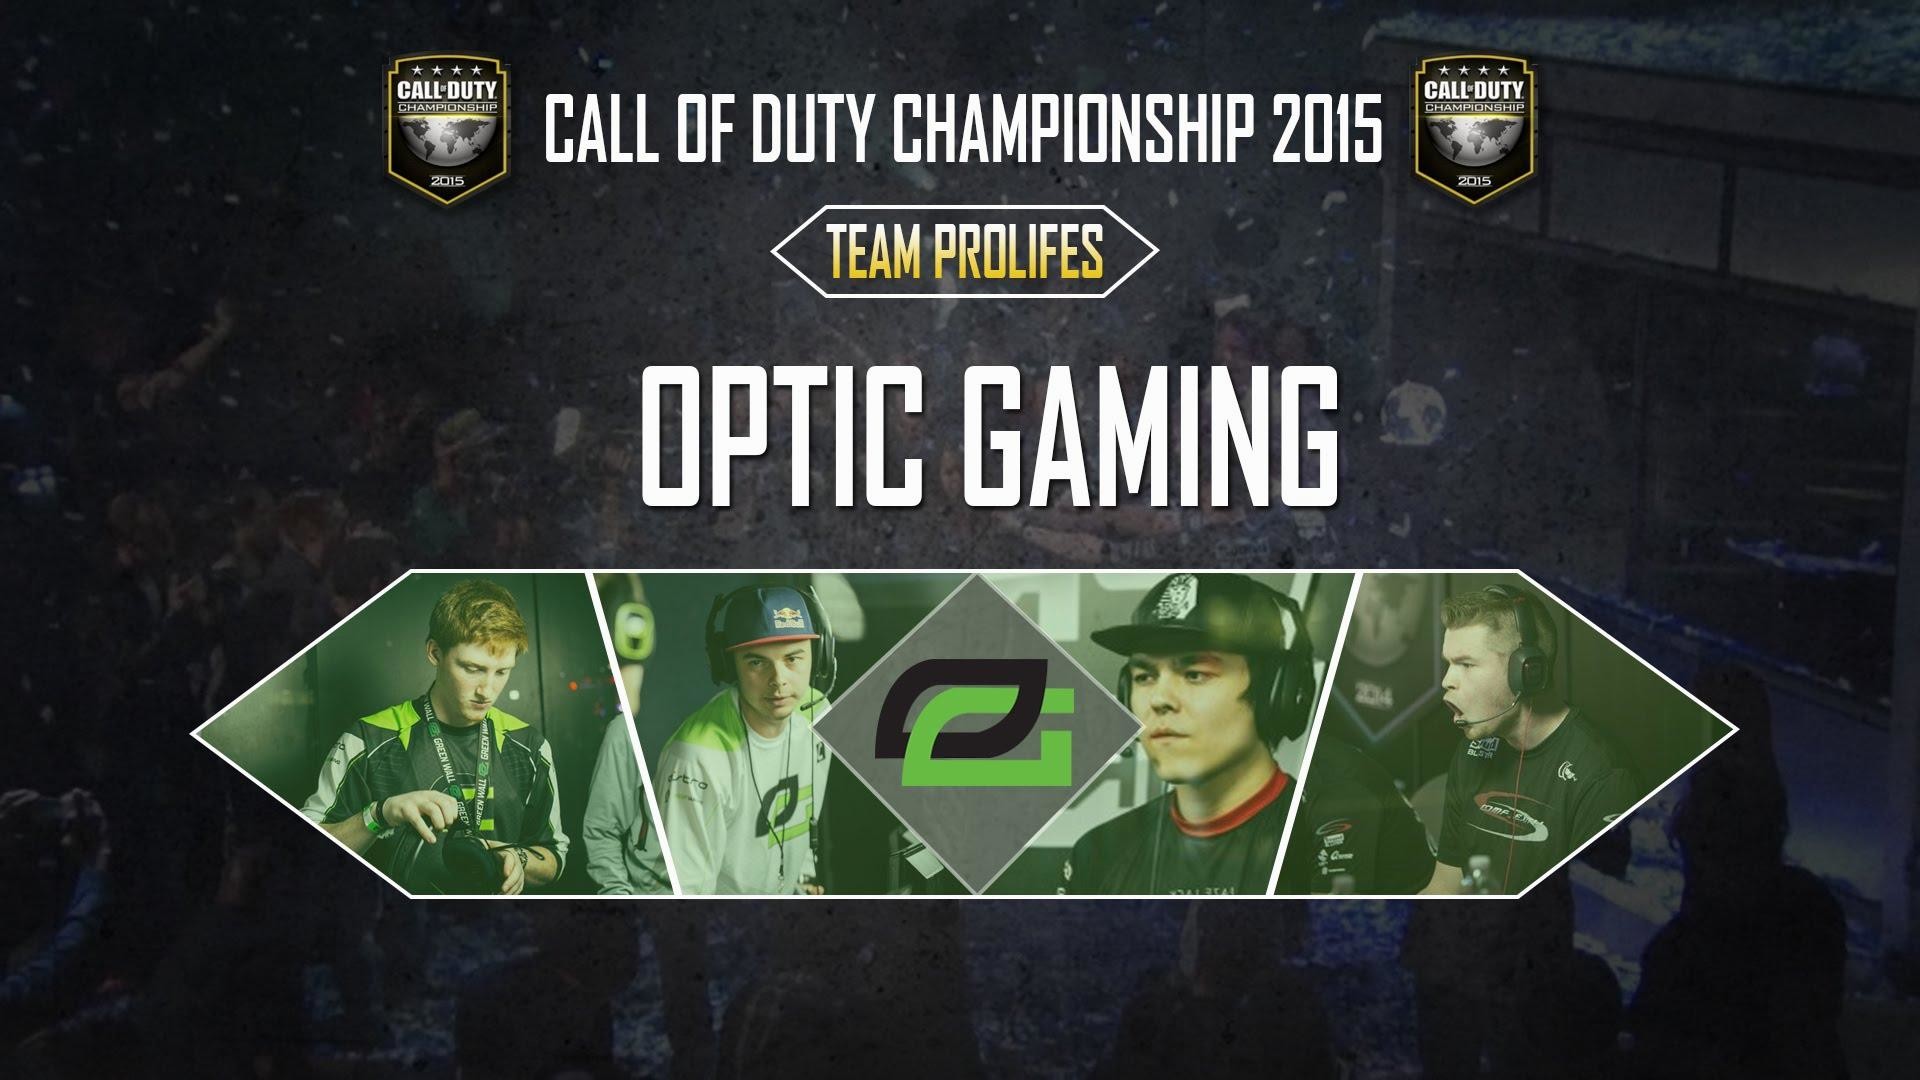 Optic gaming call of duty championship 2015